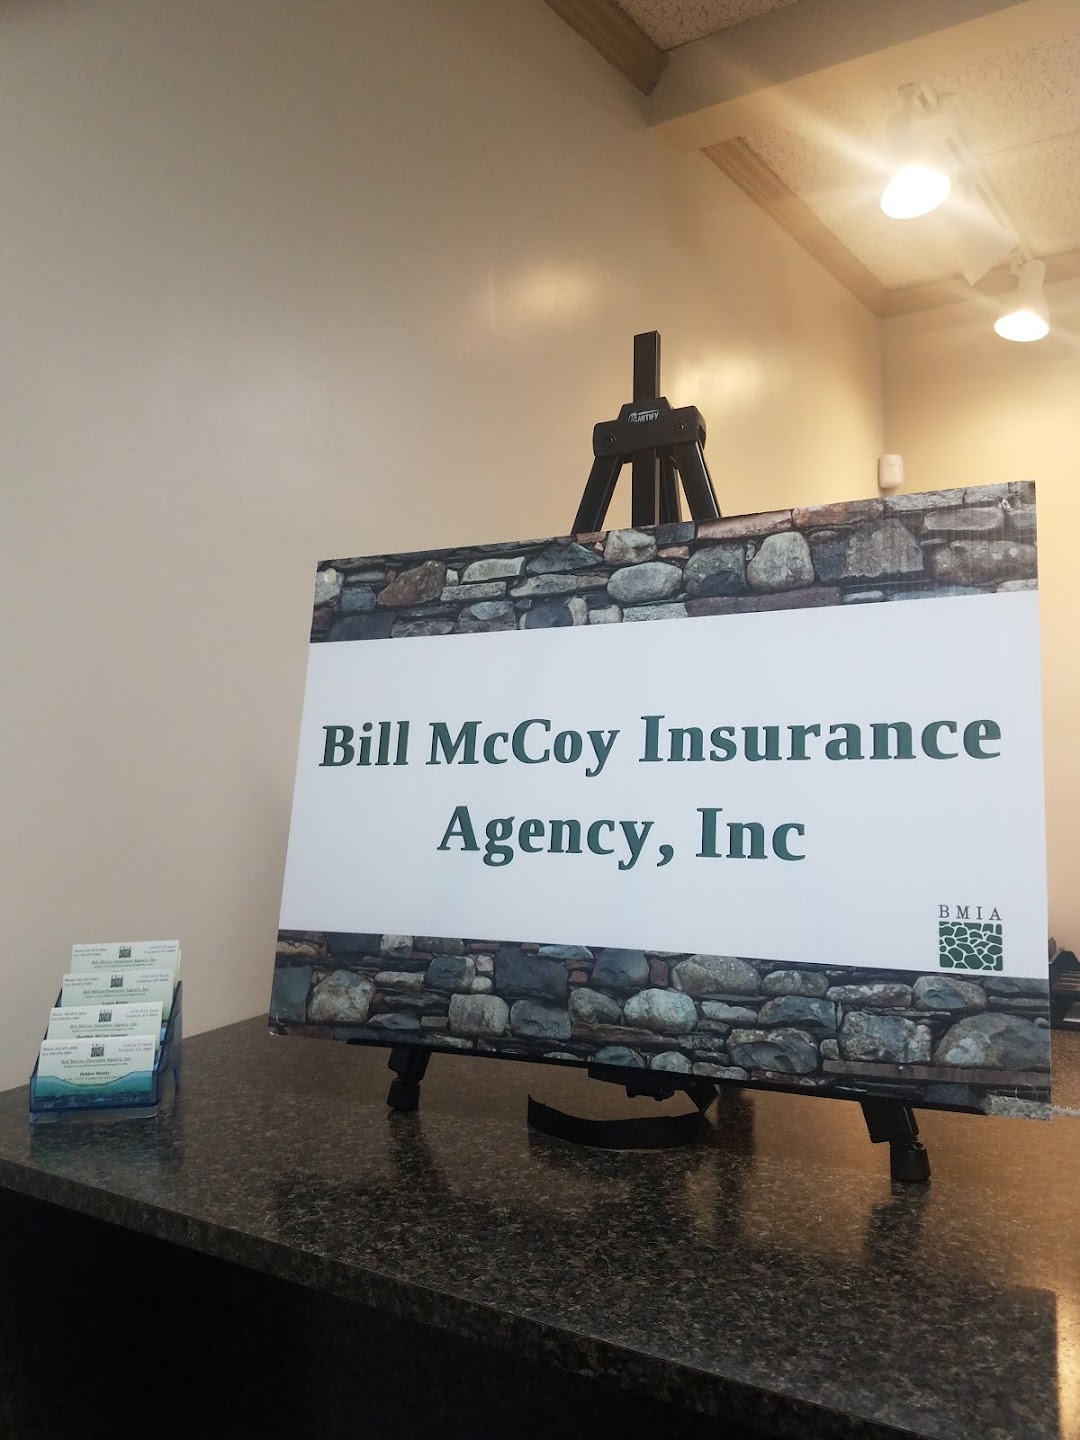 Bill McCoy Insurance Agency, Inc.